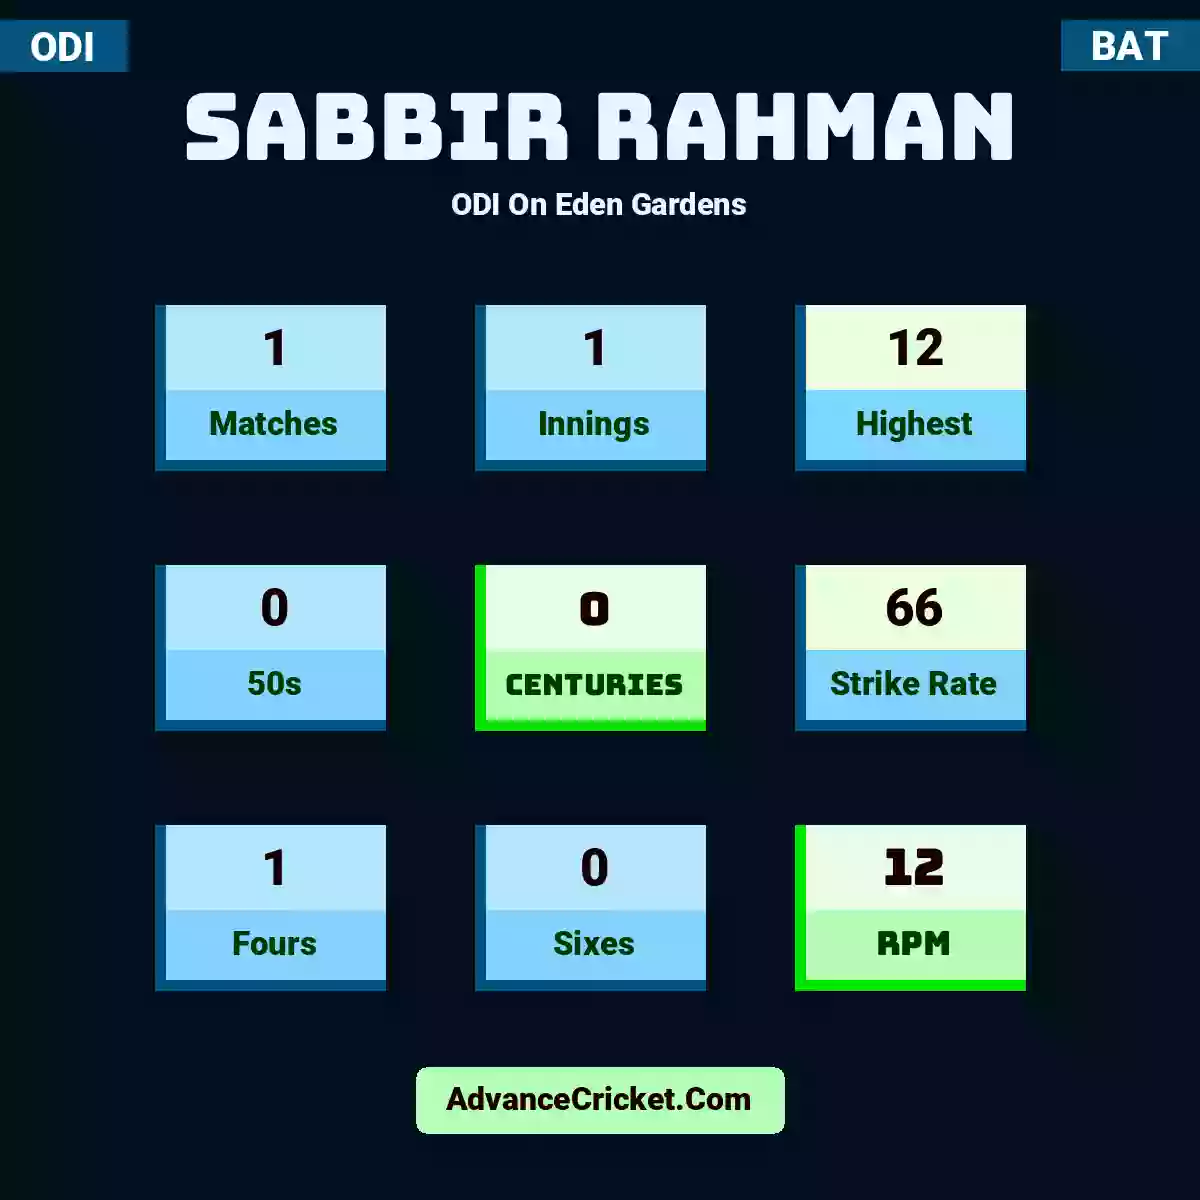 Sabbir Rahman ODI  On Eden Gardens, Sabbir Rahman played 1 matches, scored 12 runs as highest, 0 half-centuries, and 0 centuries, with a strike rate of 66. S.Rahman hit 1 fours and 0 sixes, with an RPM of 12.